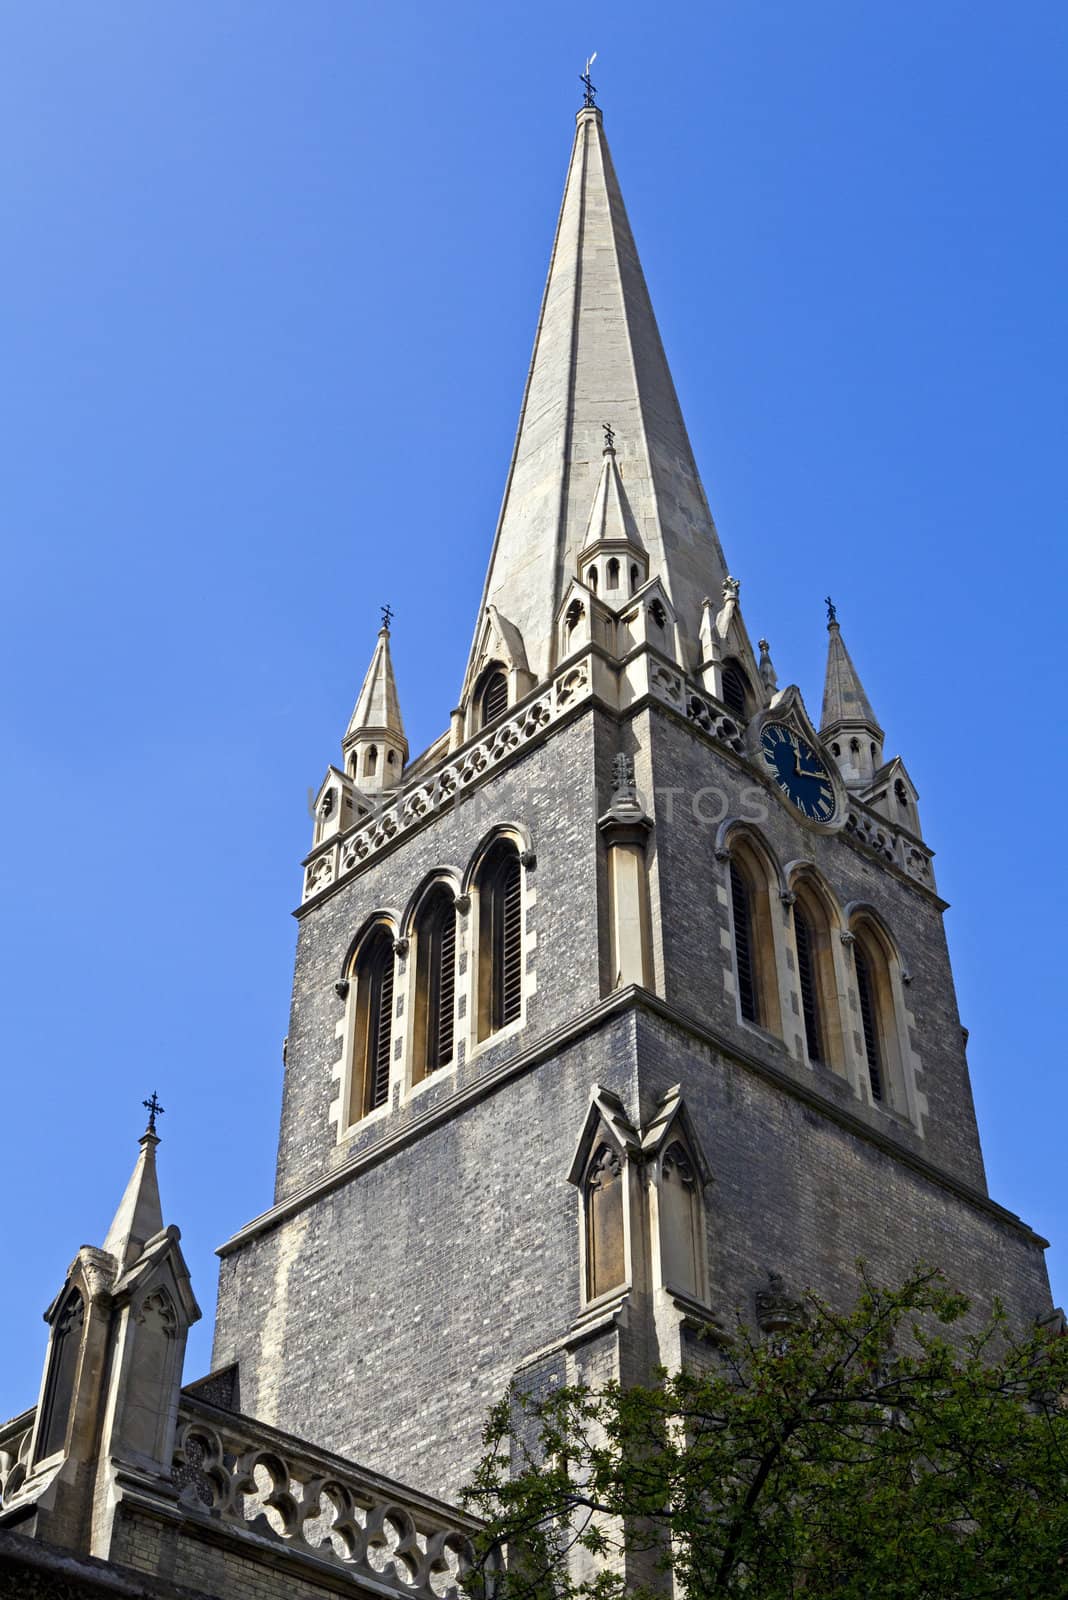 St. James The Less Church in Paddington, London.